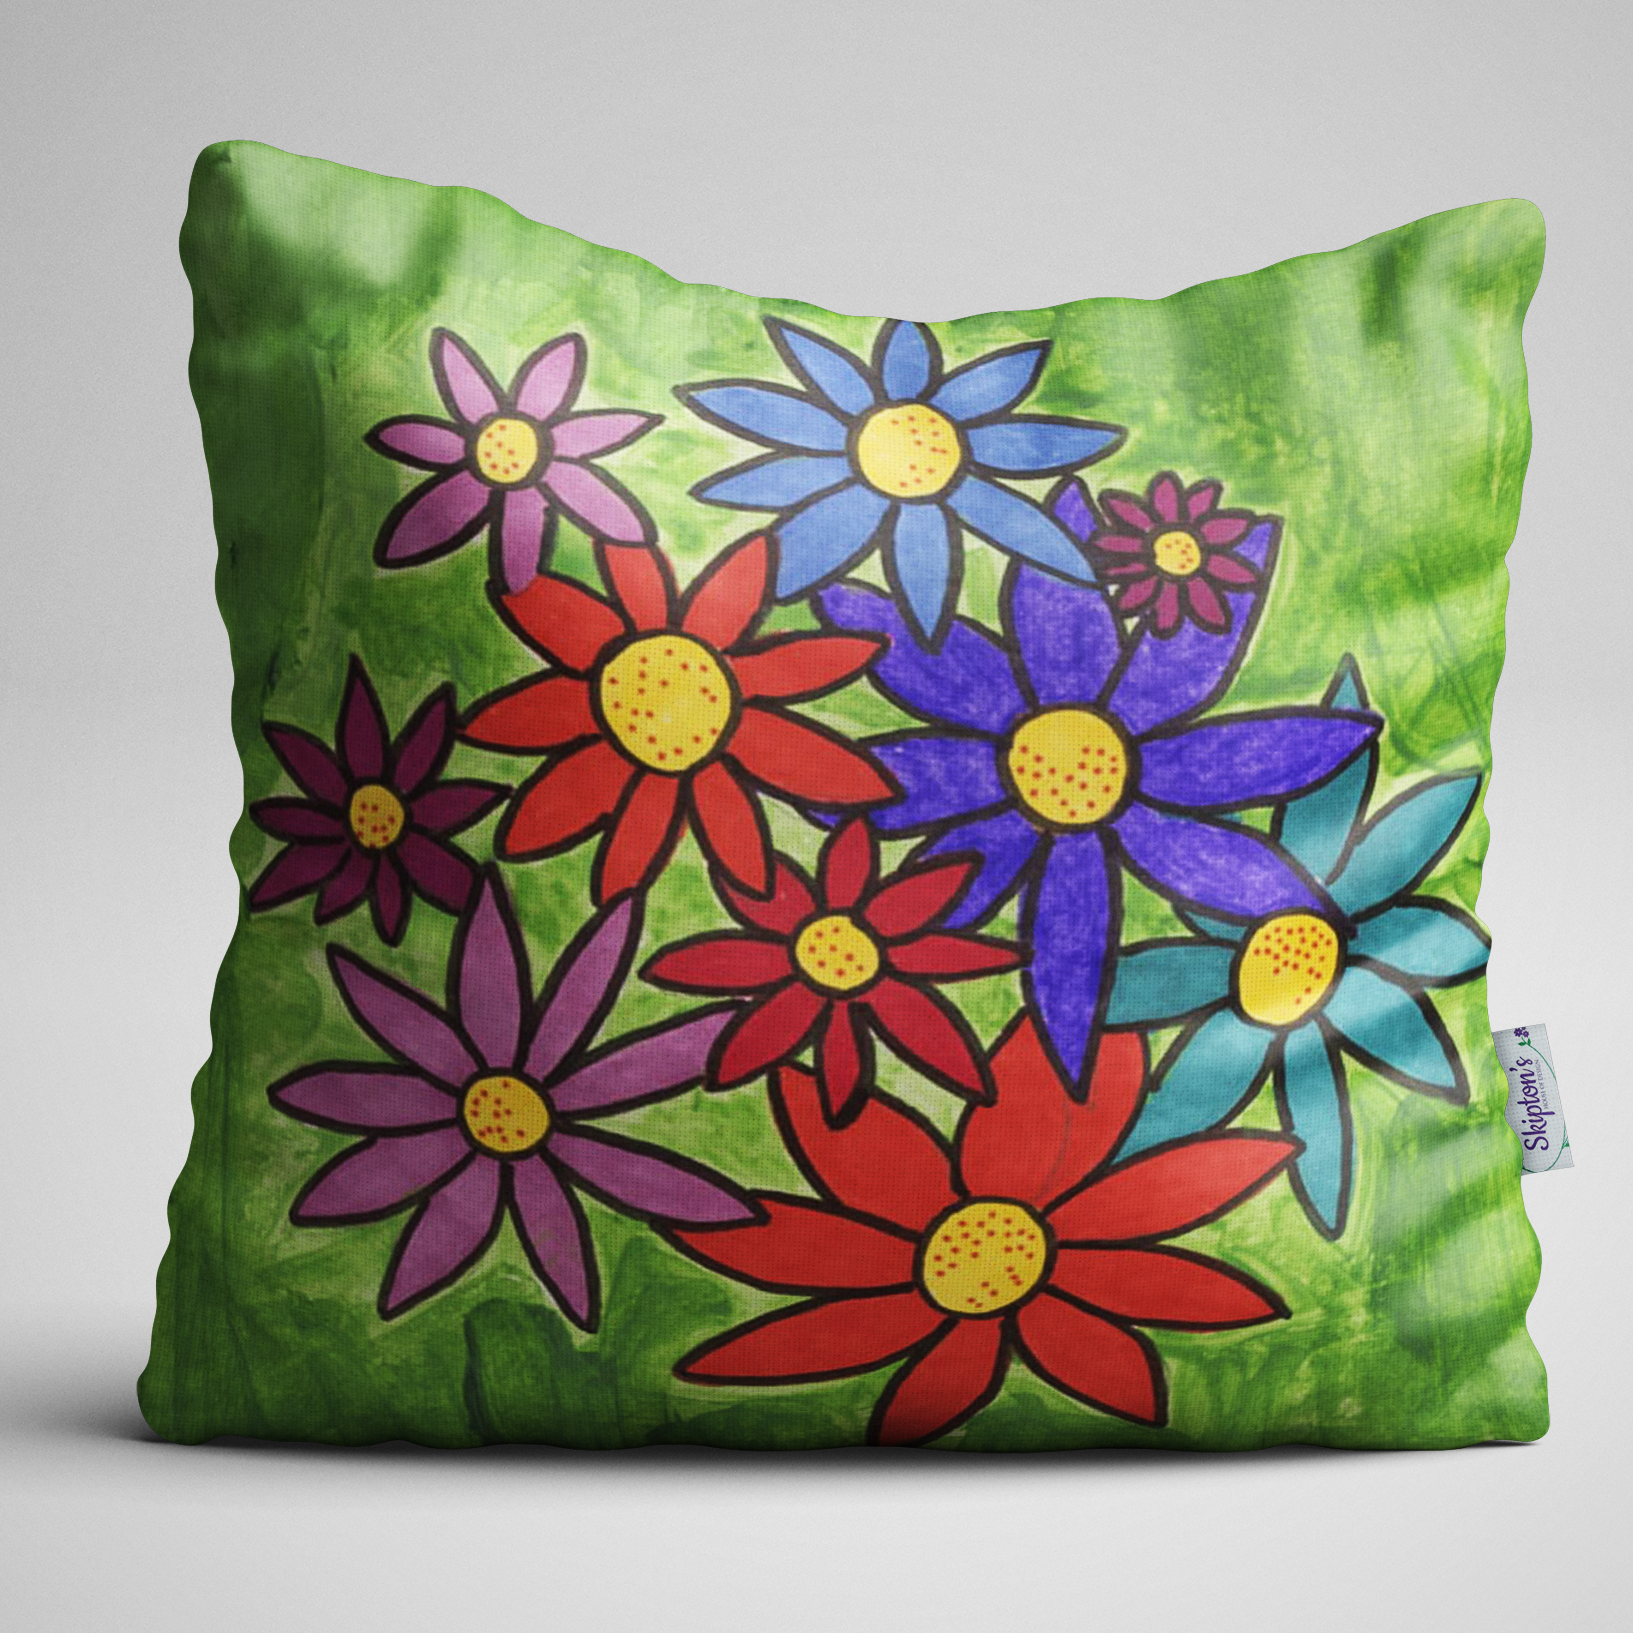 Very colourful daisy designed luxury velvet cushion